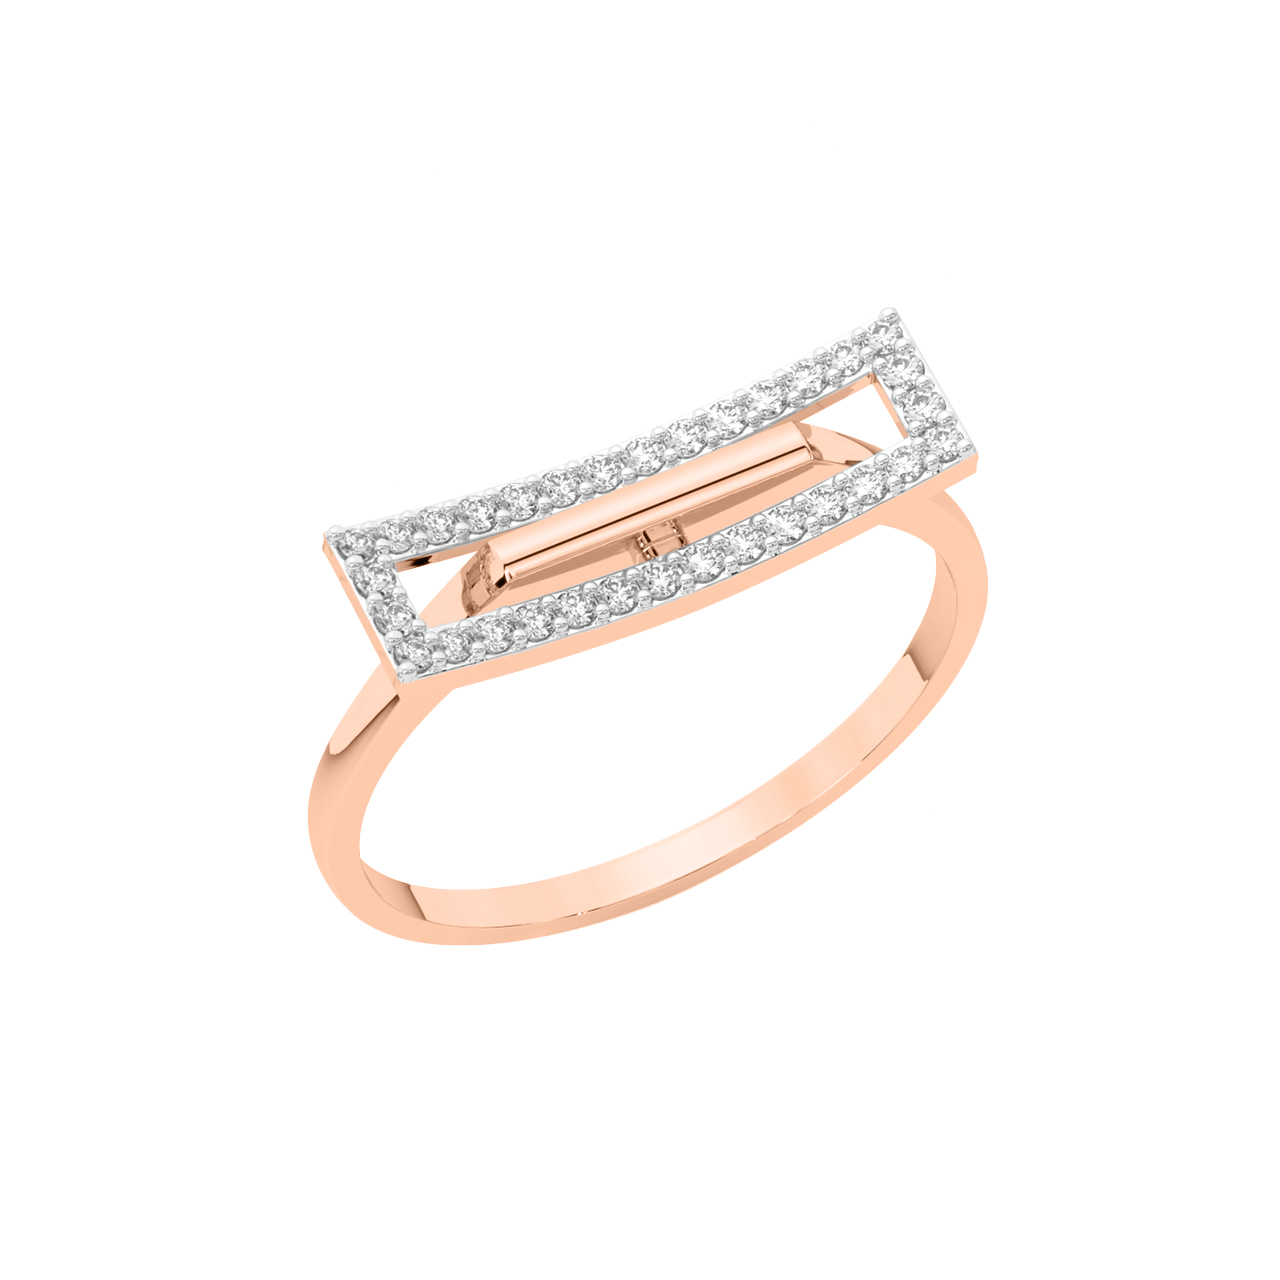 Rashne Round Diamond Engagement Ring